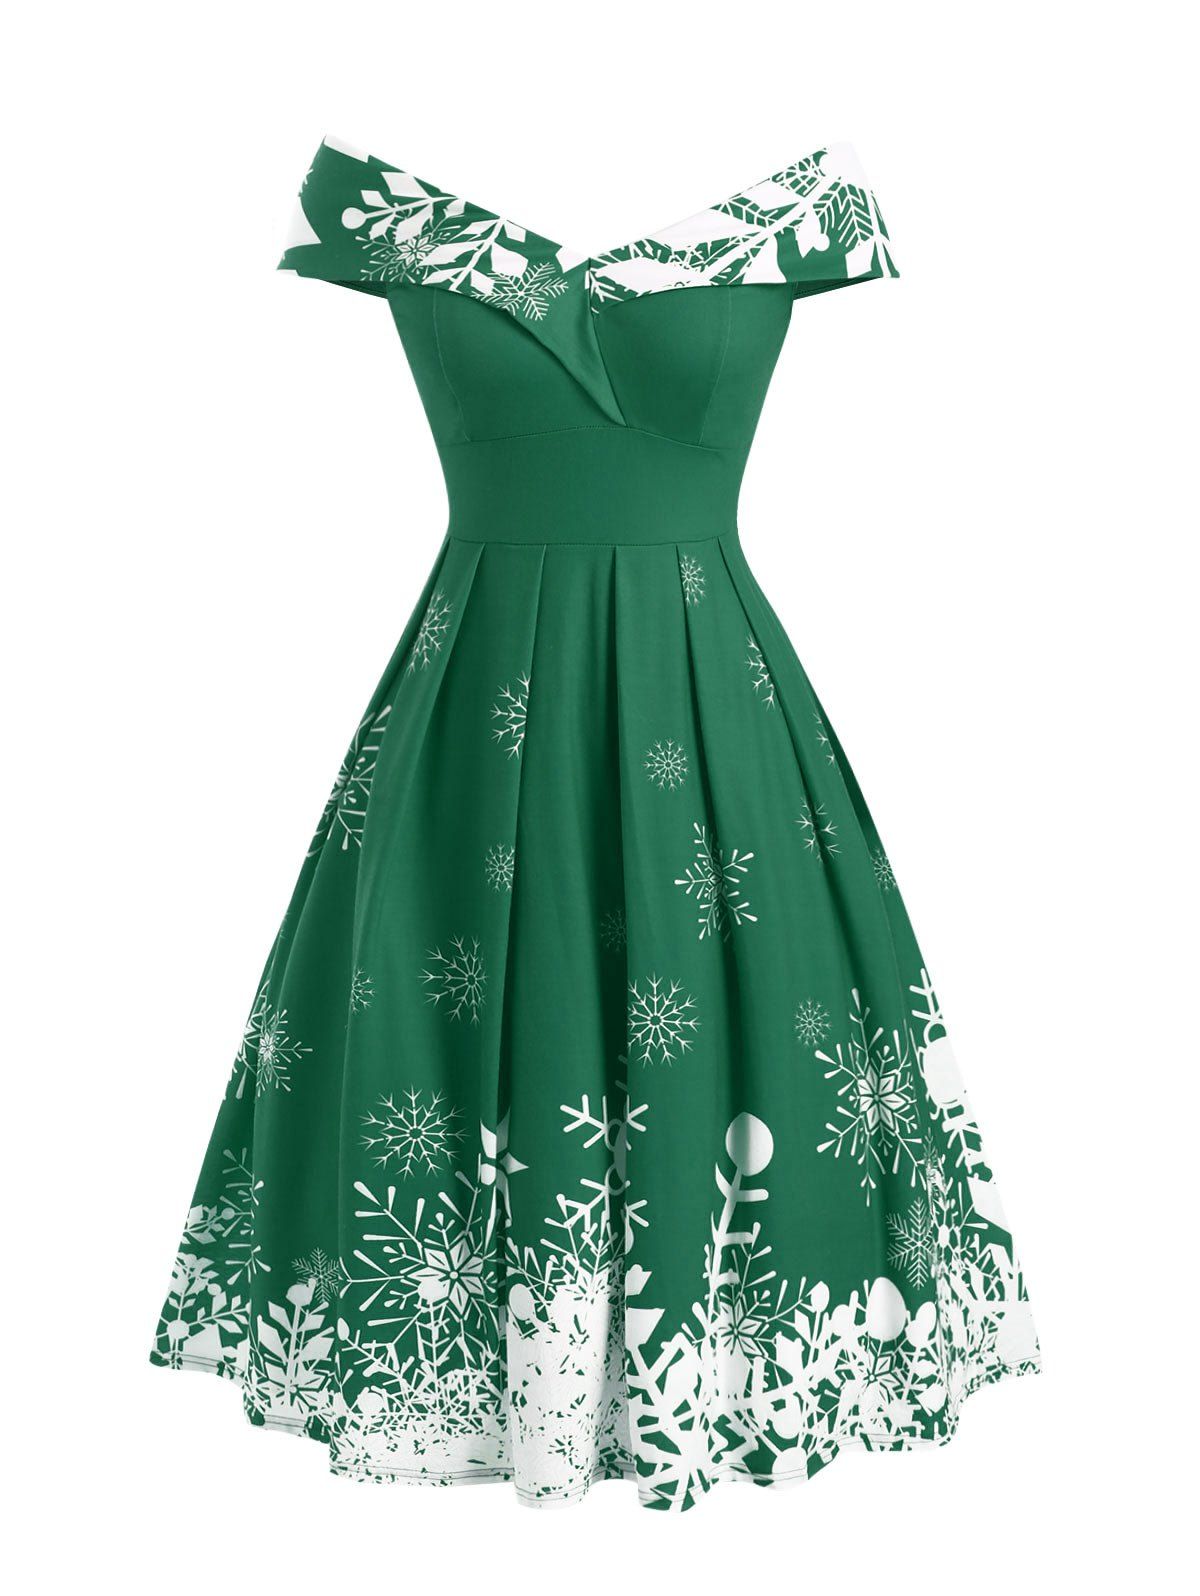 Green Polka Dot Dress Christmas Dress Dress for Dal Dal Clothes